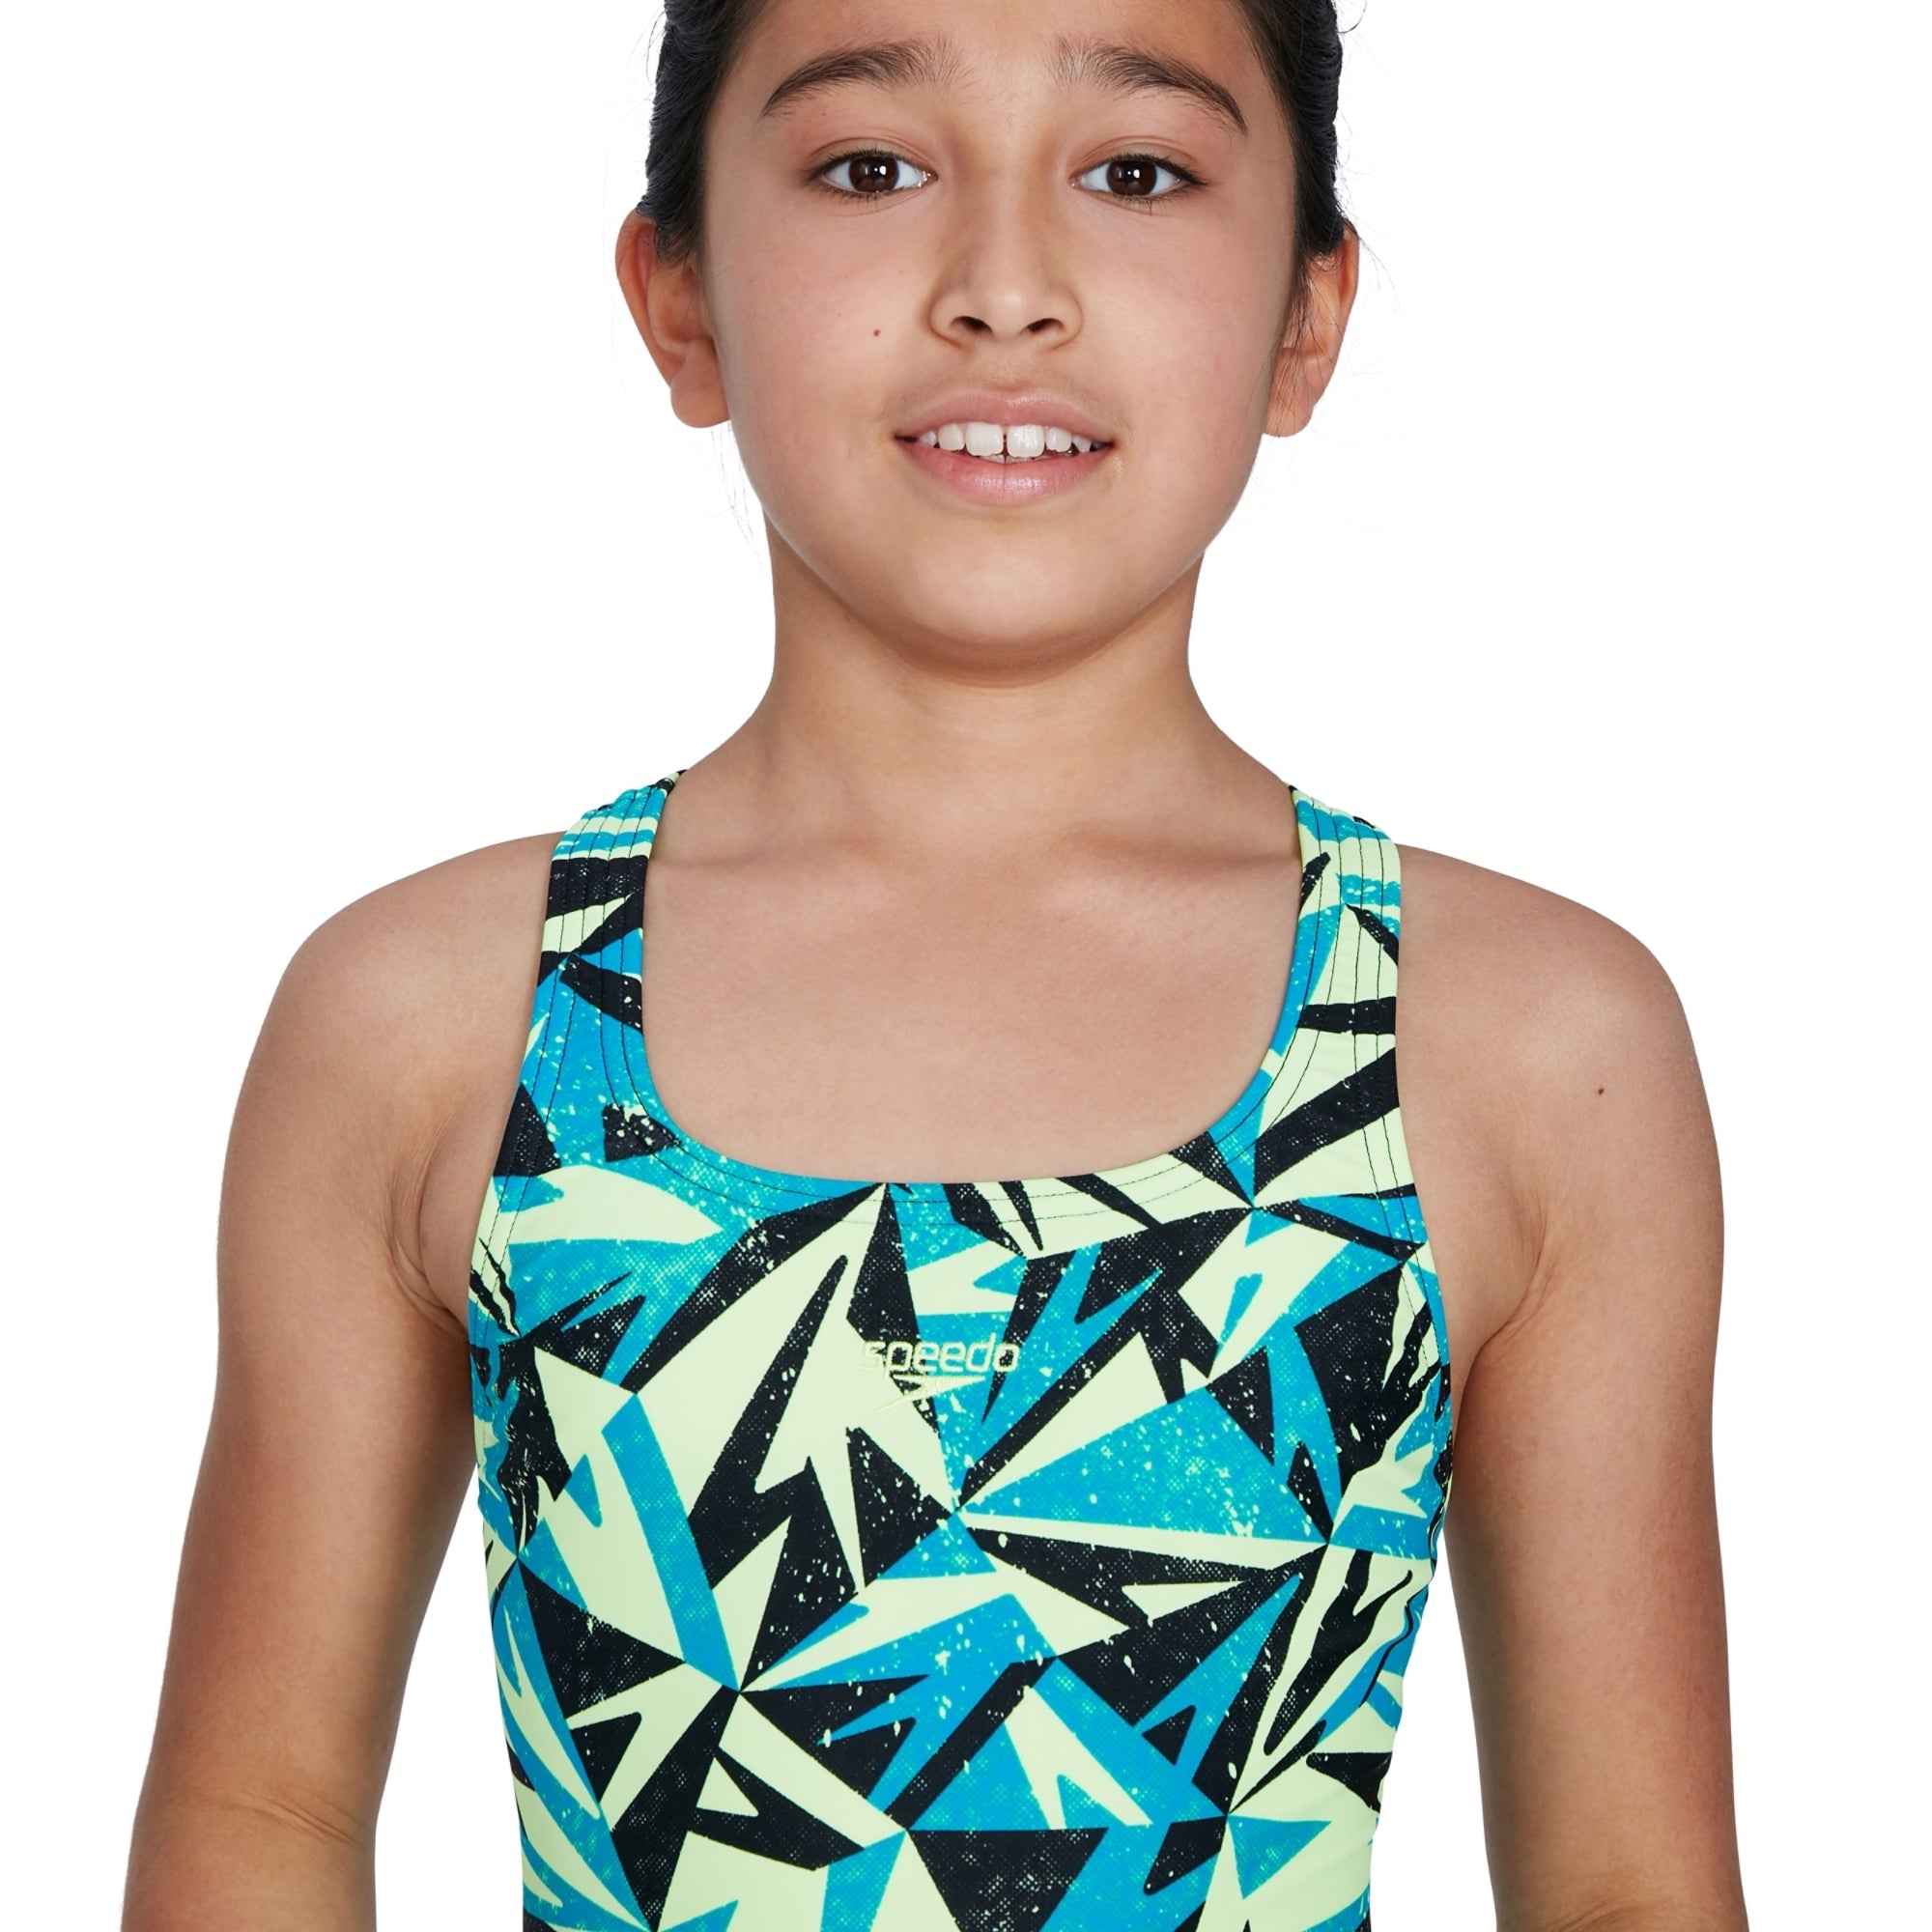 Speedo Hyper Boom Allover Medalist Swimsuit - Girls - Pool/True Navy/Bright Zest